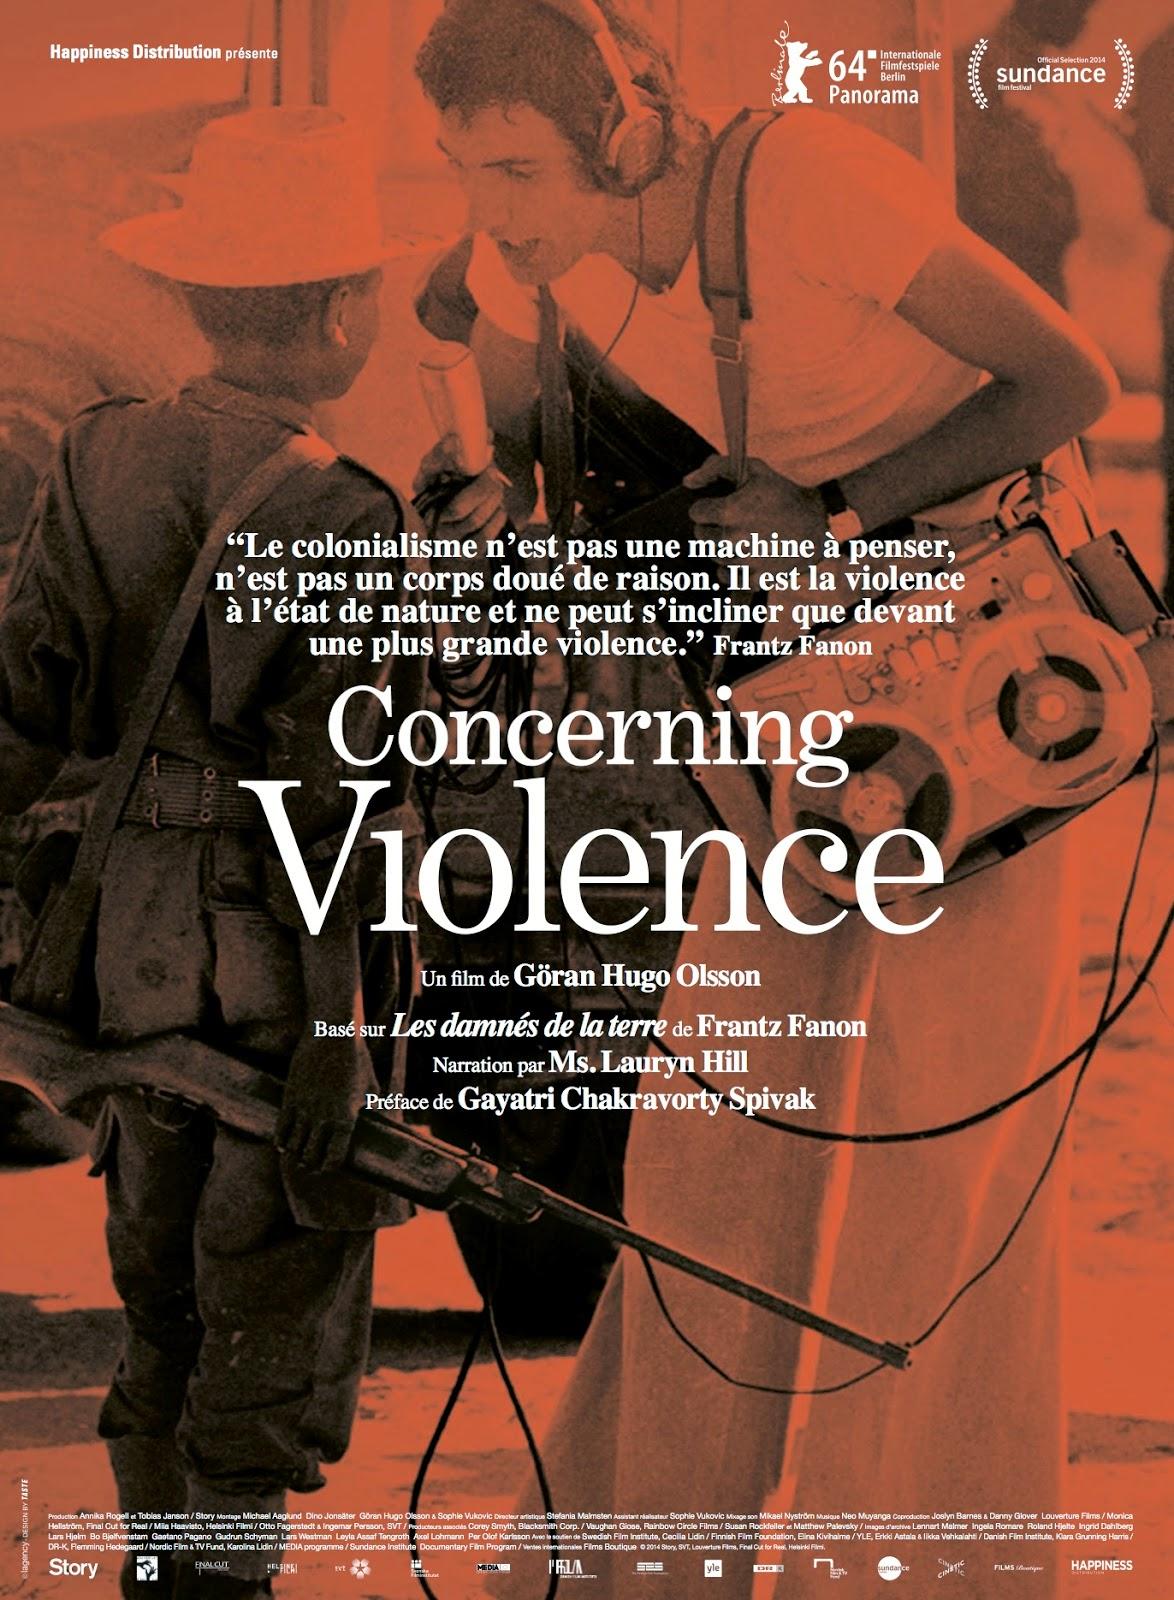 CINEMA: Concerning Violence (2014), au cœur des ténèbres / heart of darkness